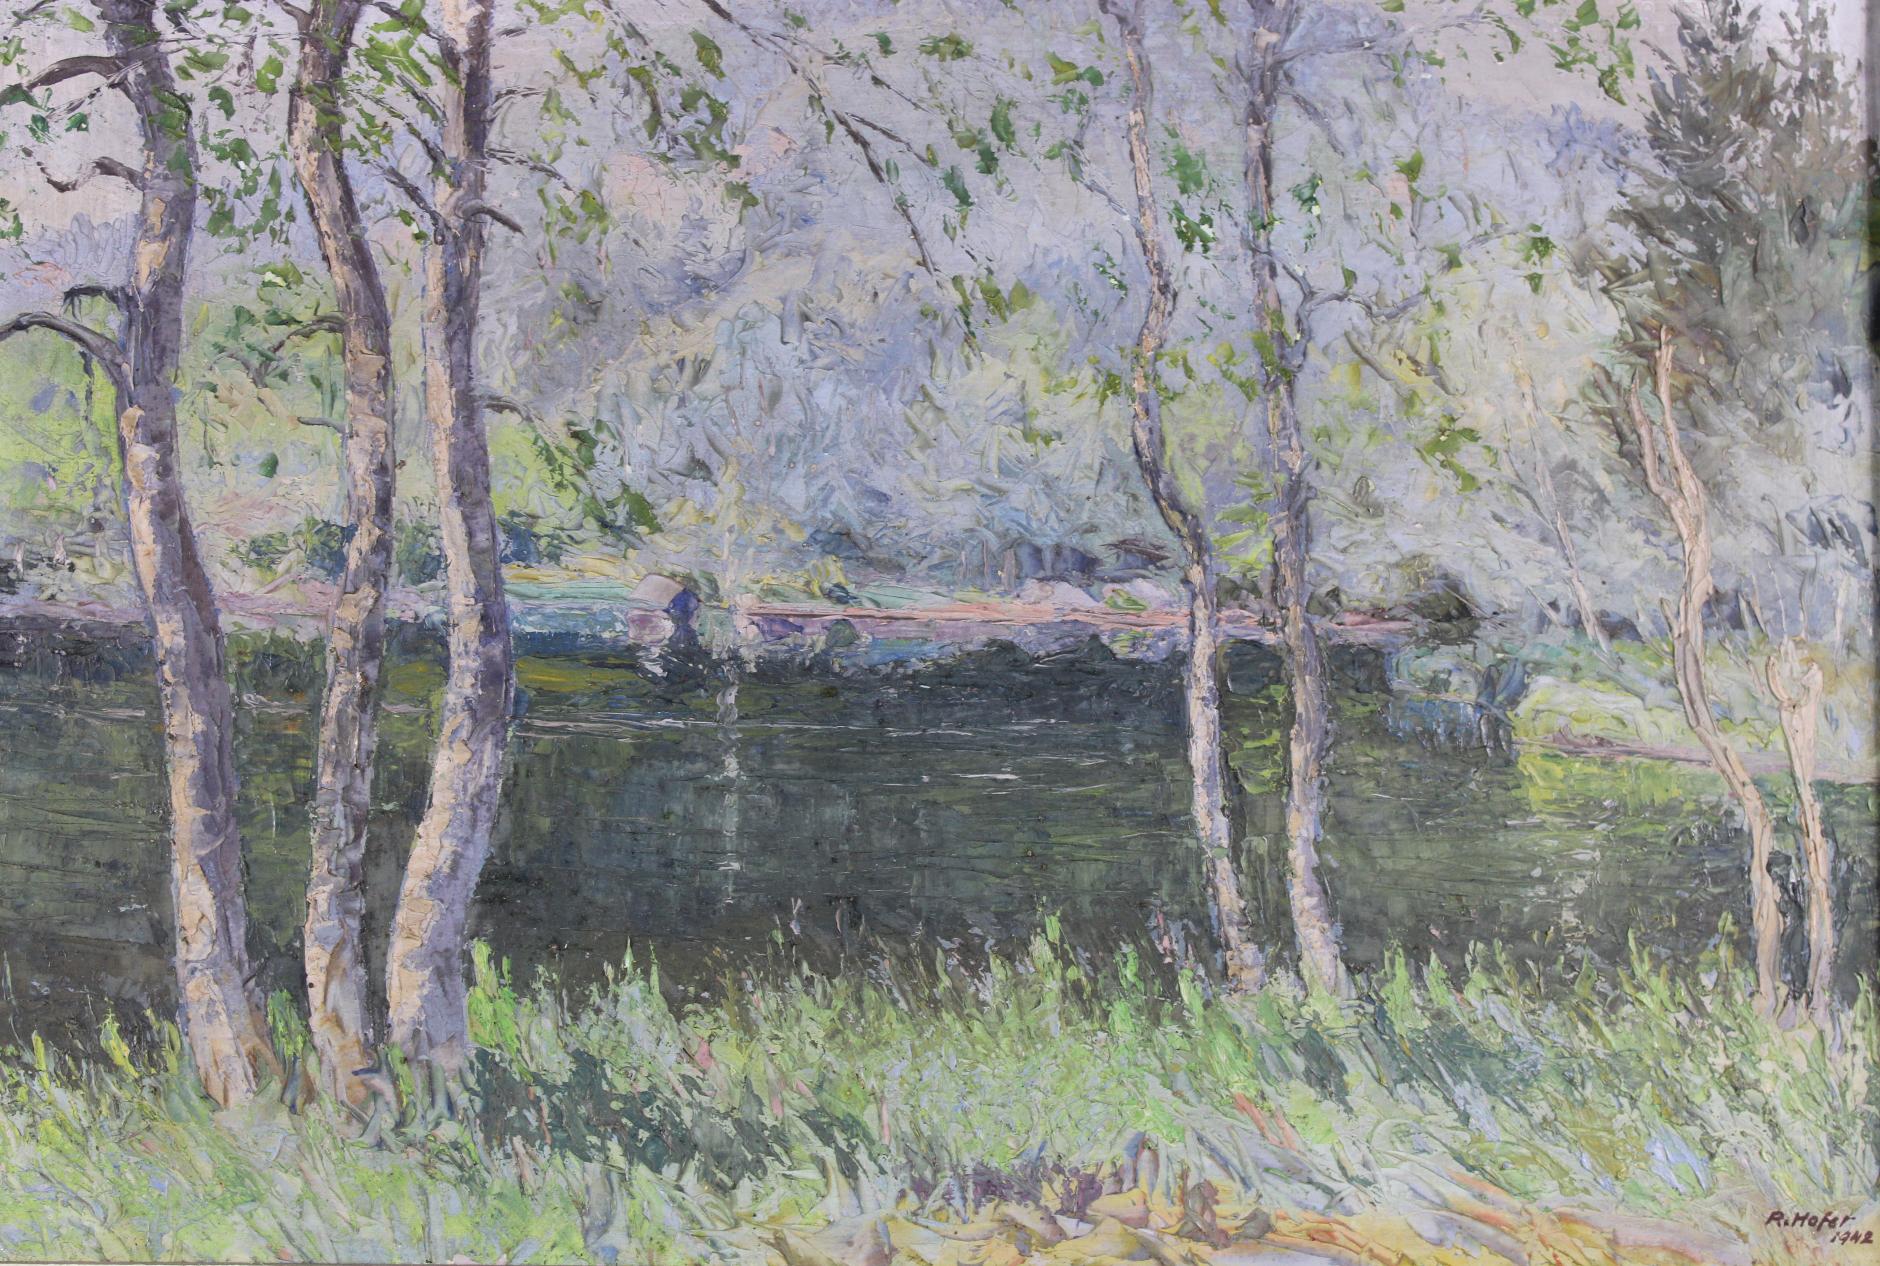 Robert Hofer Landscape Painting - Countryside of France, Original Oil on cardboard, Impressionist style, signed